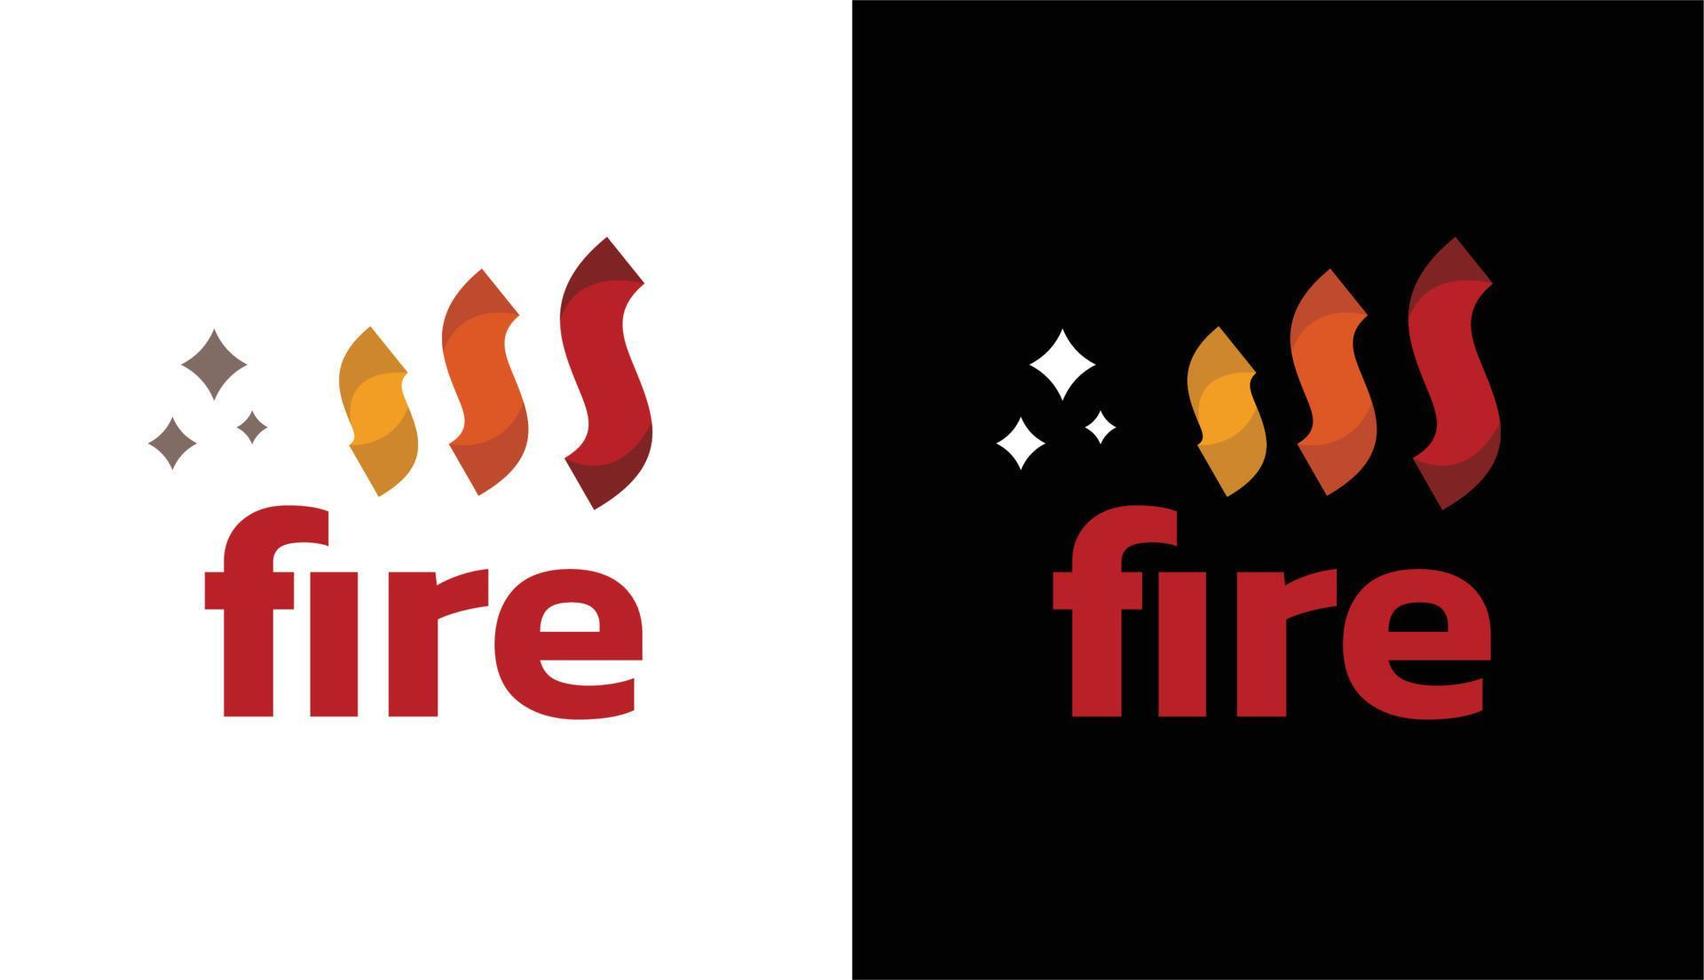 logo rojo monoline 3 fire, logo vintage para restaurante. plantilla de logotipo para negocio de café vector